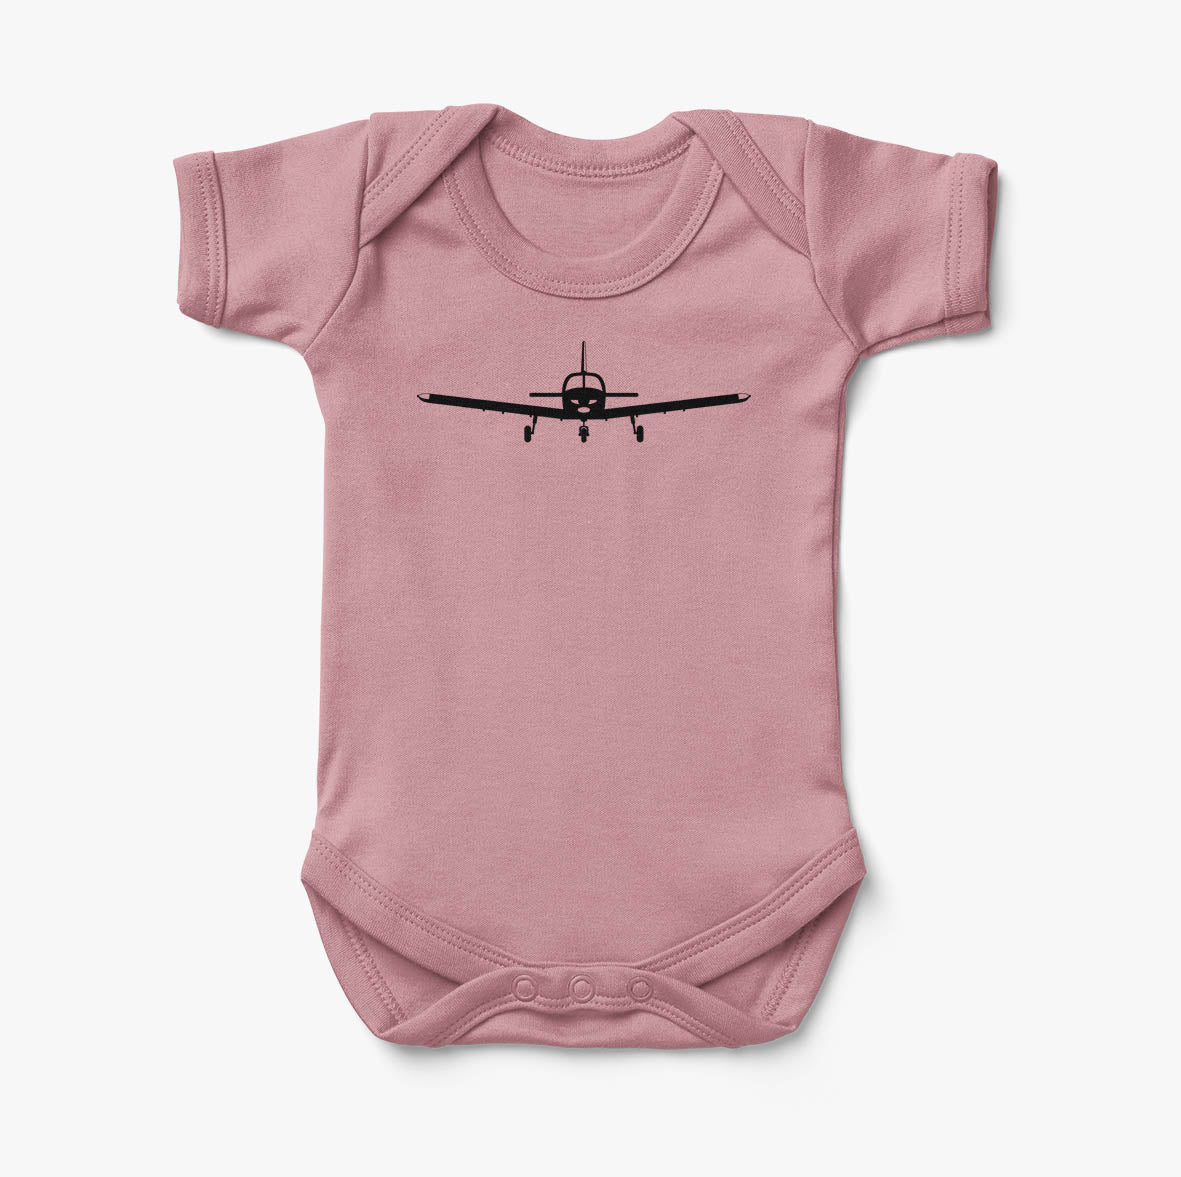 Piper PA28 Silhouette Designed Baby Bodysuits